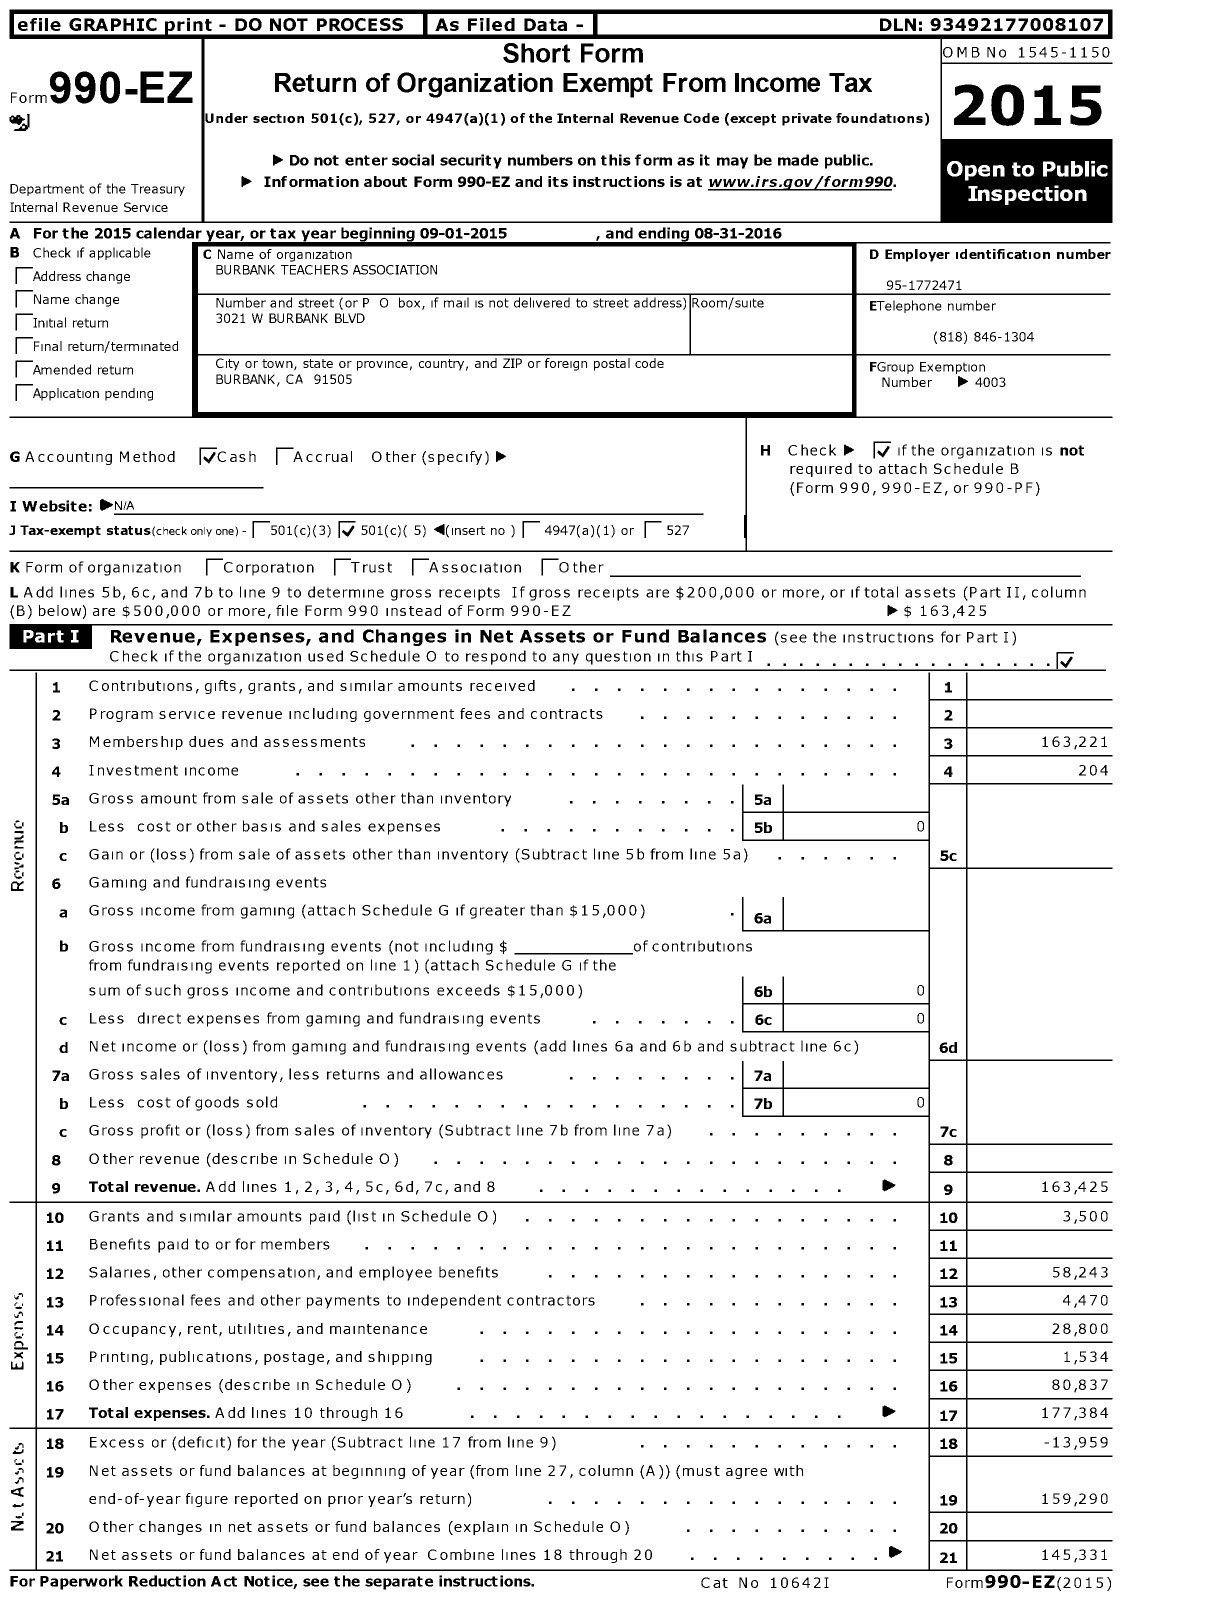 Image of first page of 2015 Form 990EO for California Teachers Association - Burbank Teachers Association